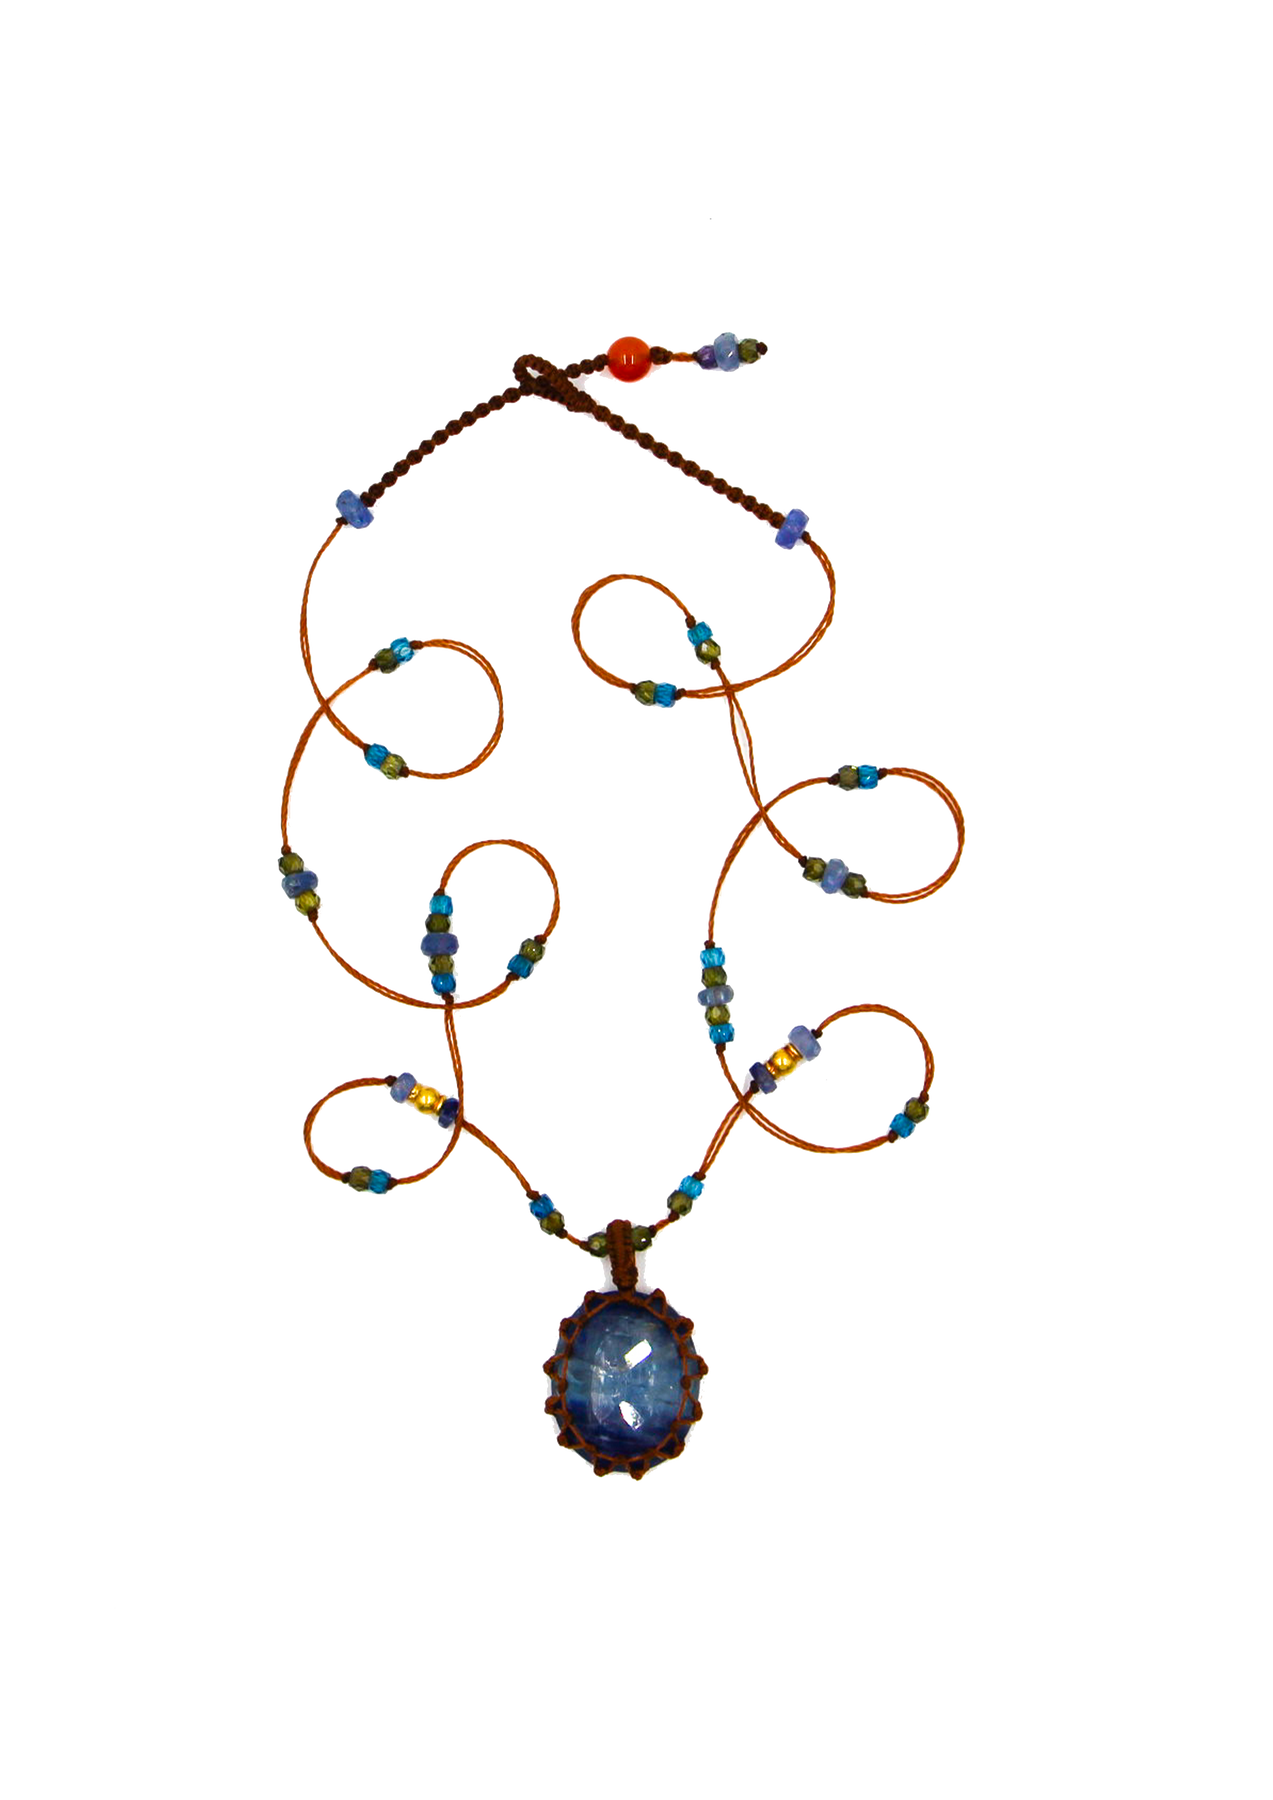 So Precious Short Tibetan Necklace - Blue Kyanite - Mix Sapphire - Beige Thread